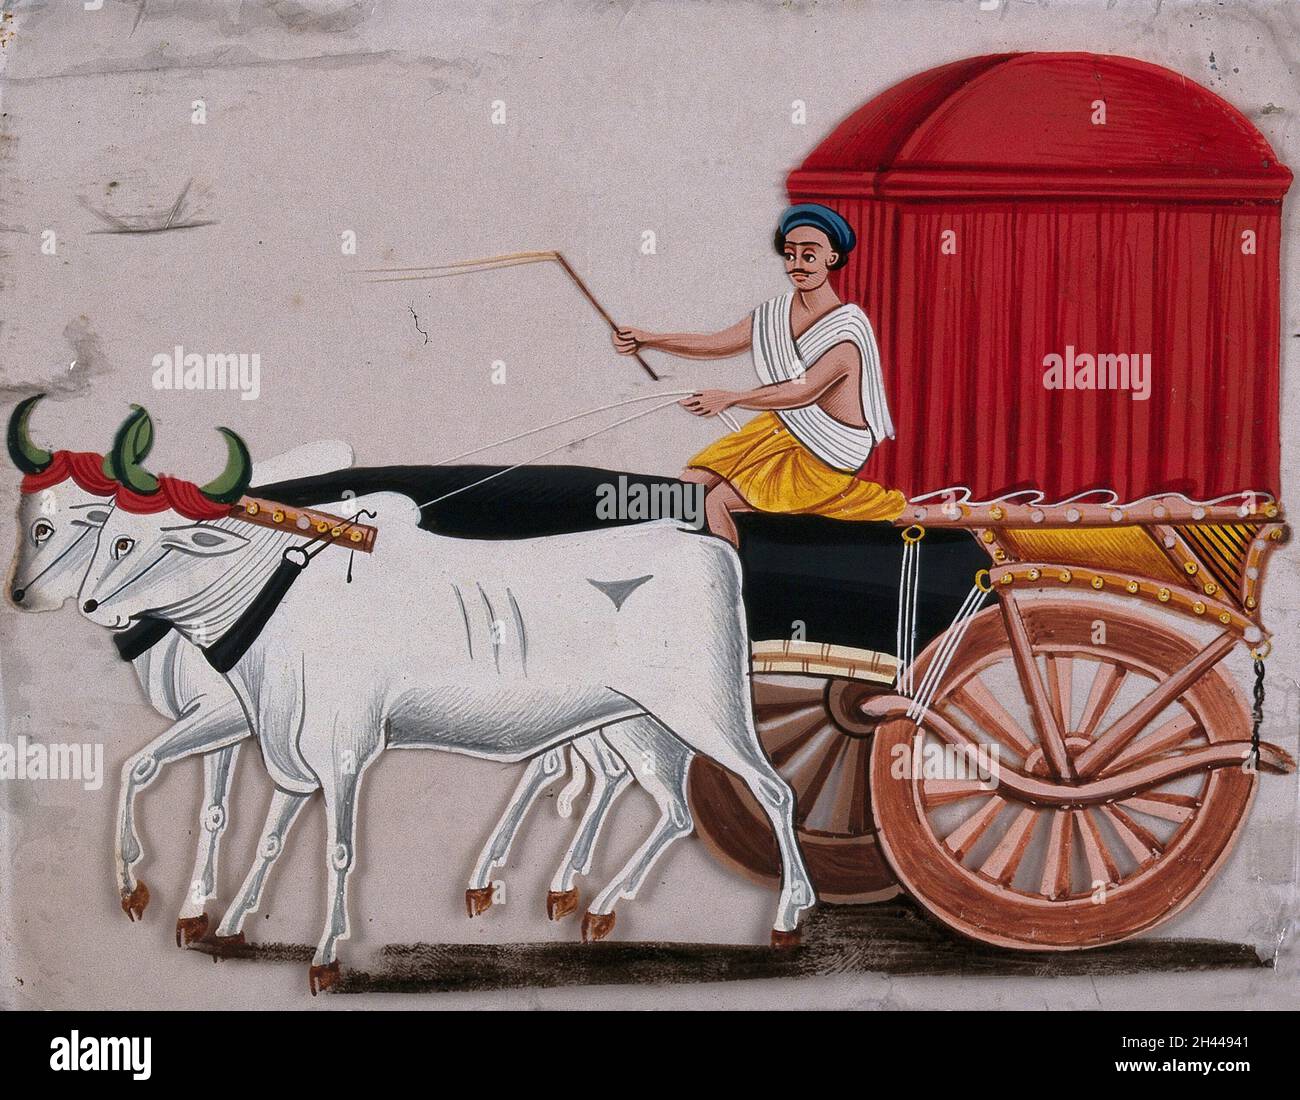 Bullocks with painted horns drawing a bullock cart, India Stock Photo -  Alamy